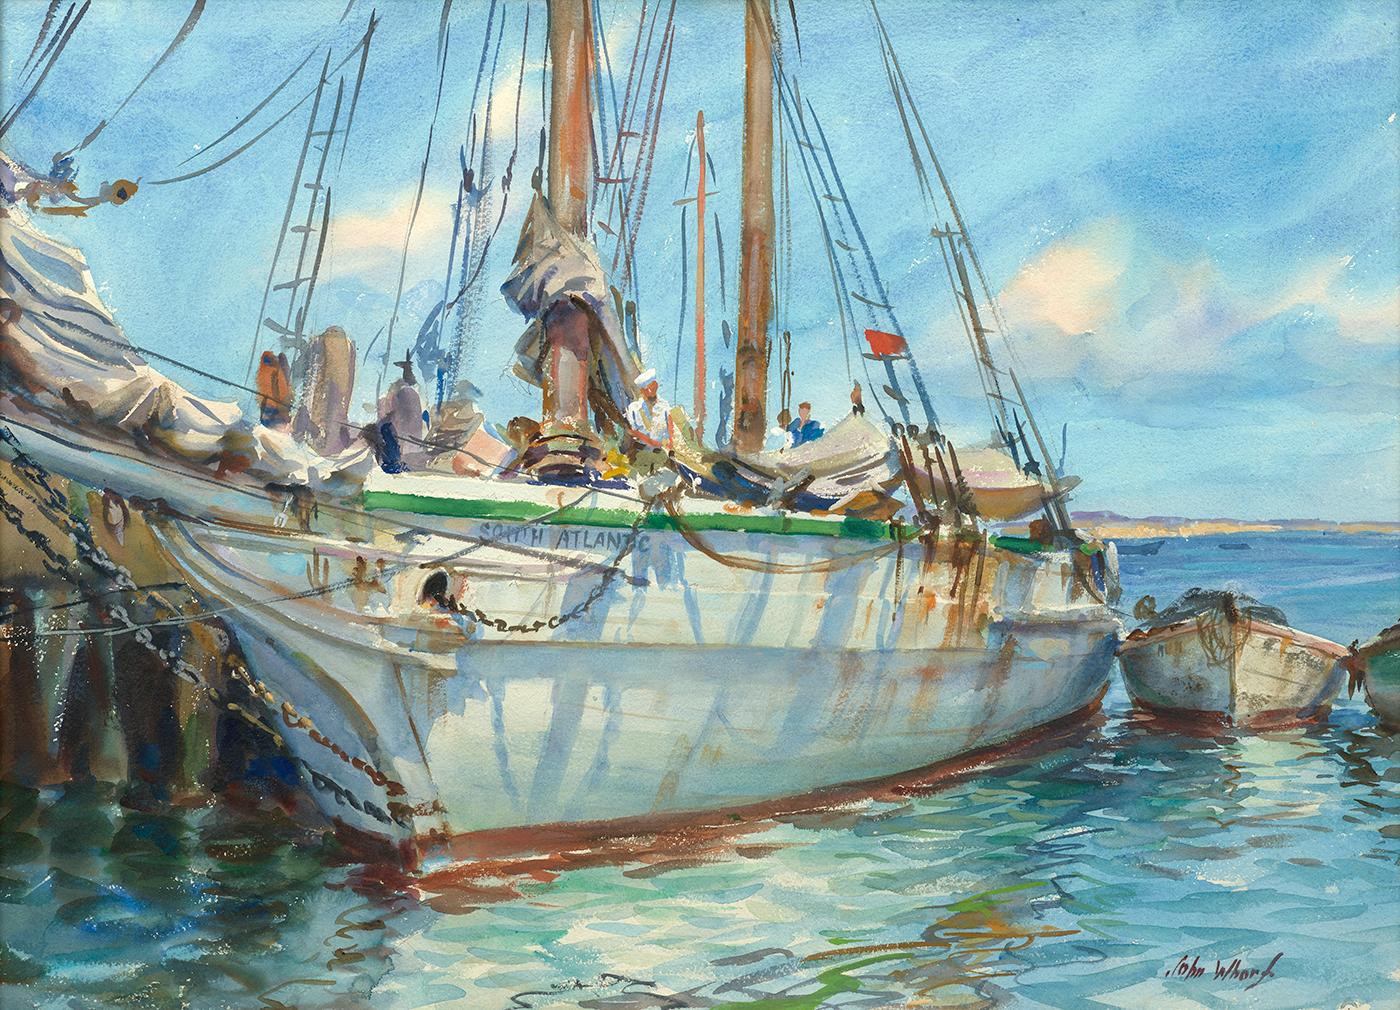 Landscape Painting John Whorf - The South Atlantic in Port (au verso : Seascape Study)